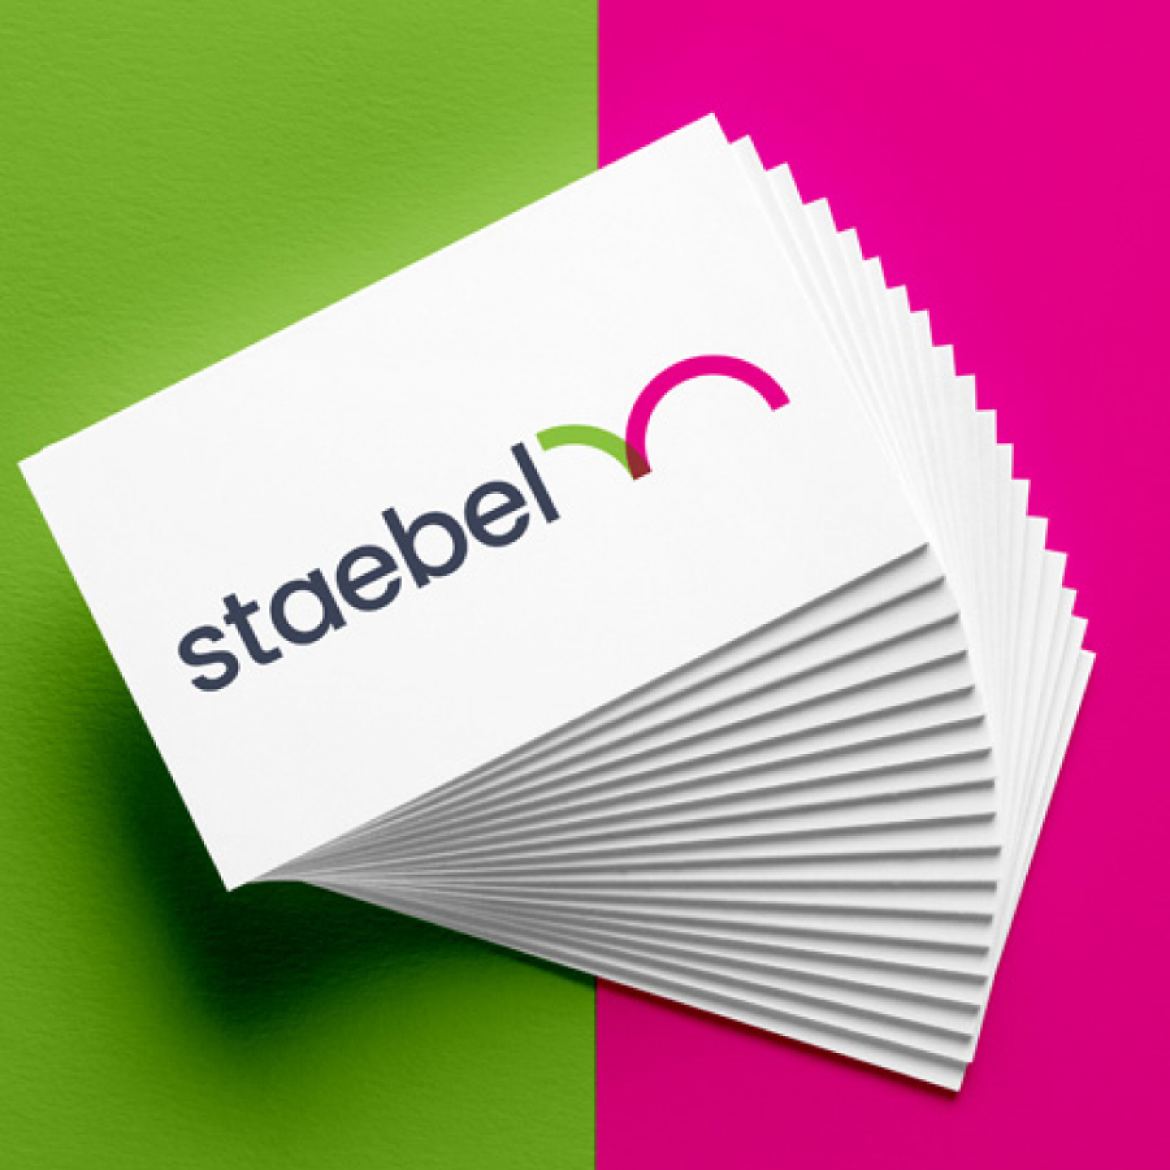 Staebel - Healthcare